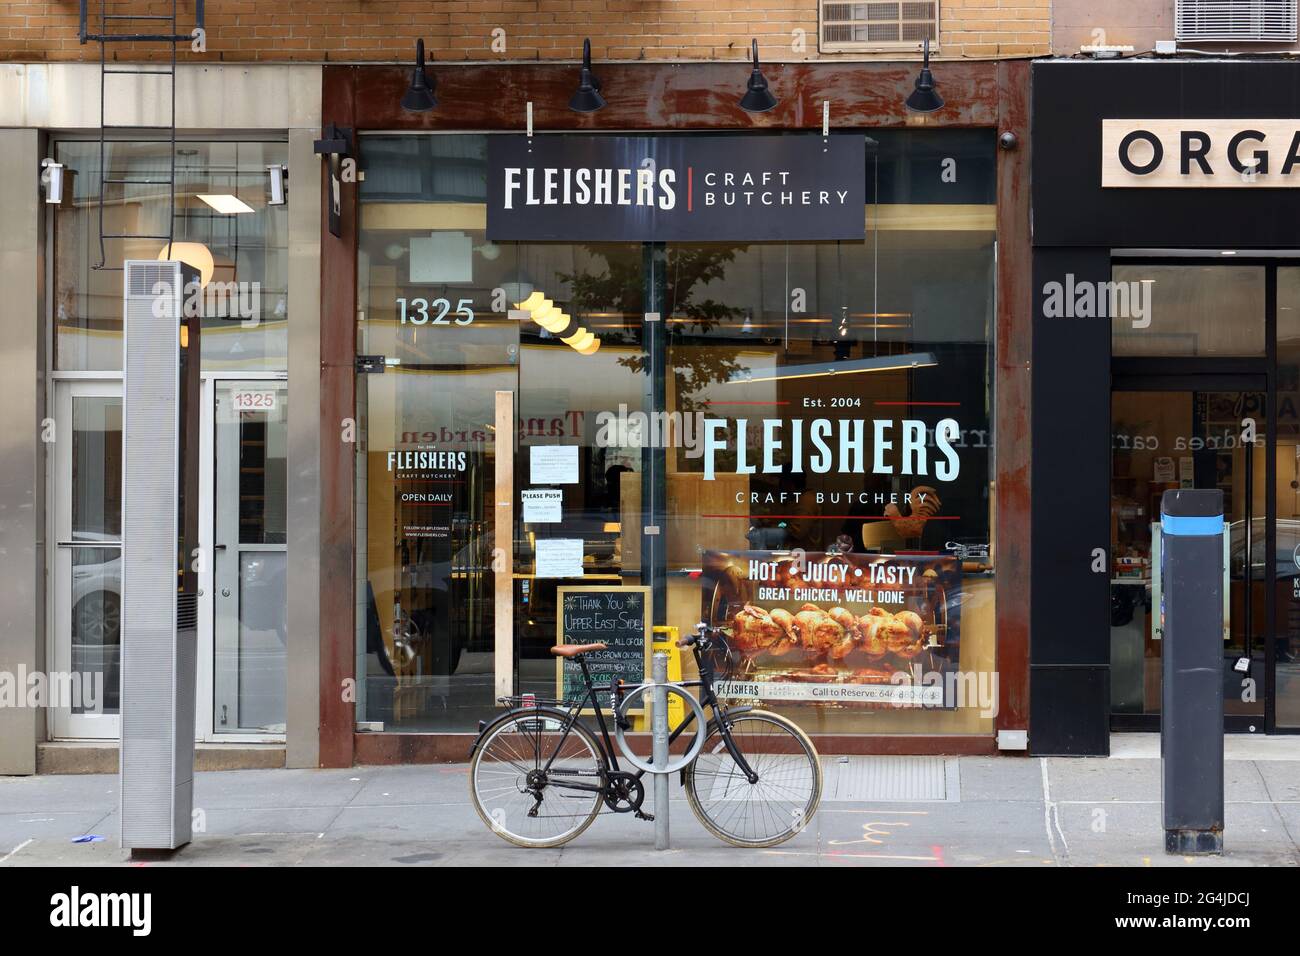 [Magasin historique] Fleishers Craft Butchery, 1325 3rd Ave, New York, New York, New York, New York photo d'un boucherie dans l'Upper East Side de Manhattan. Banque D'Images